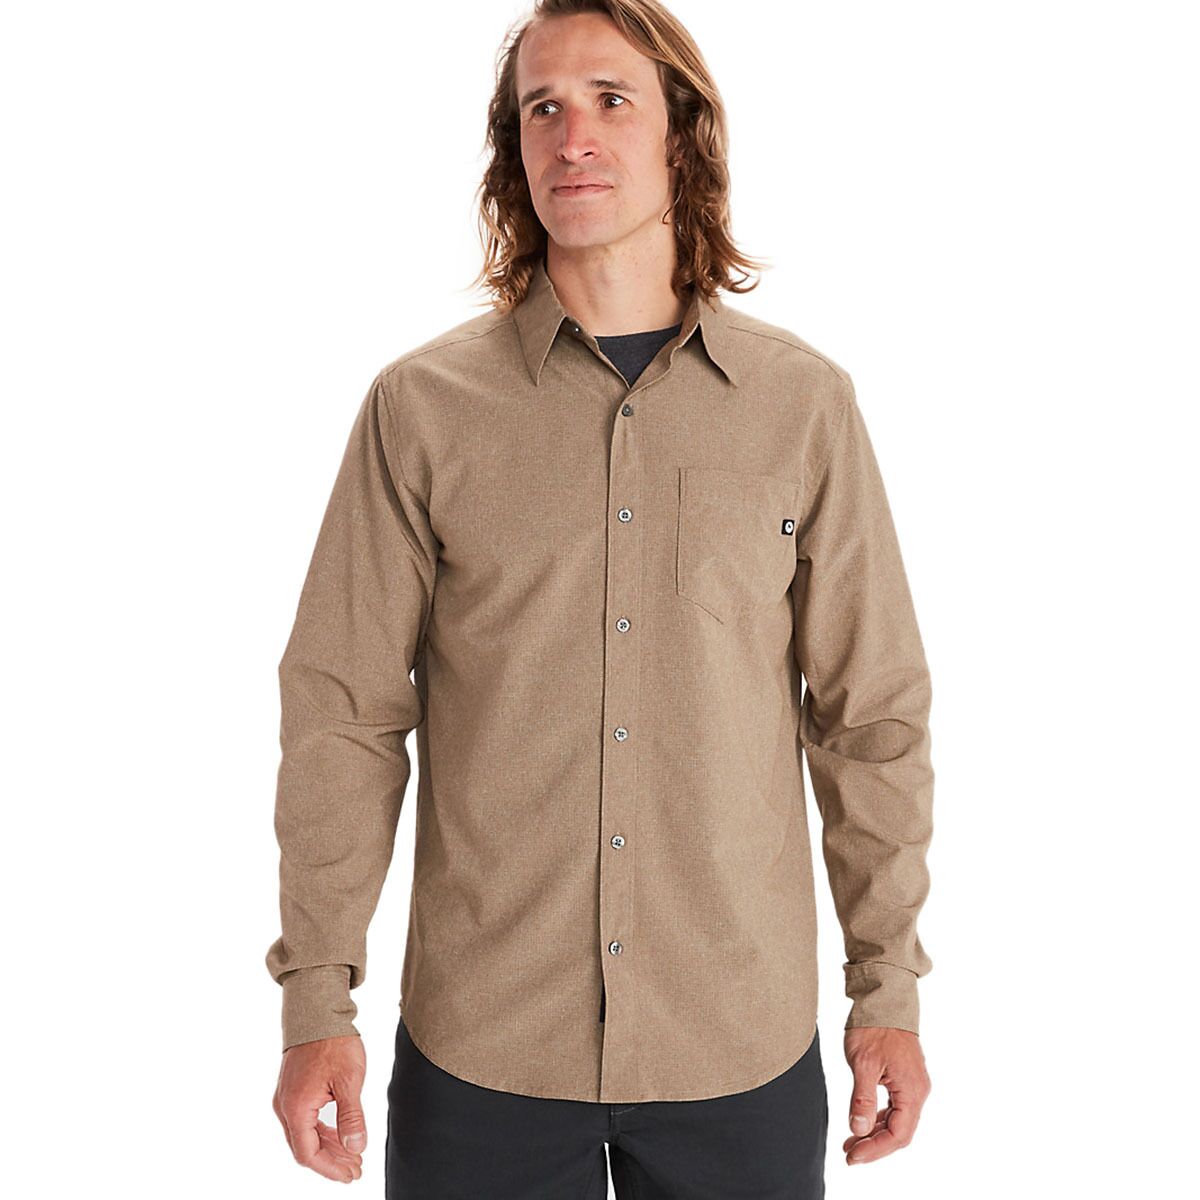 Aerobora Long-Sleeve Shirt - Men